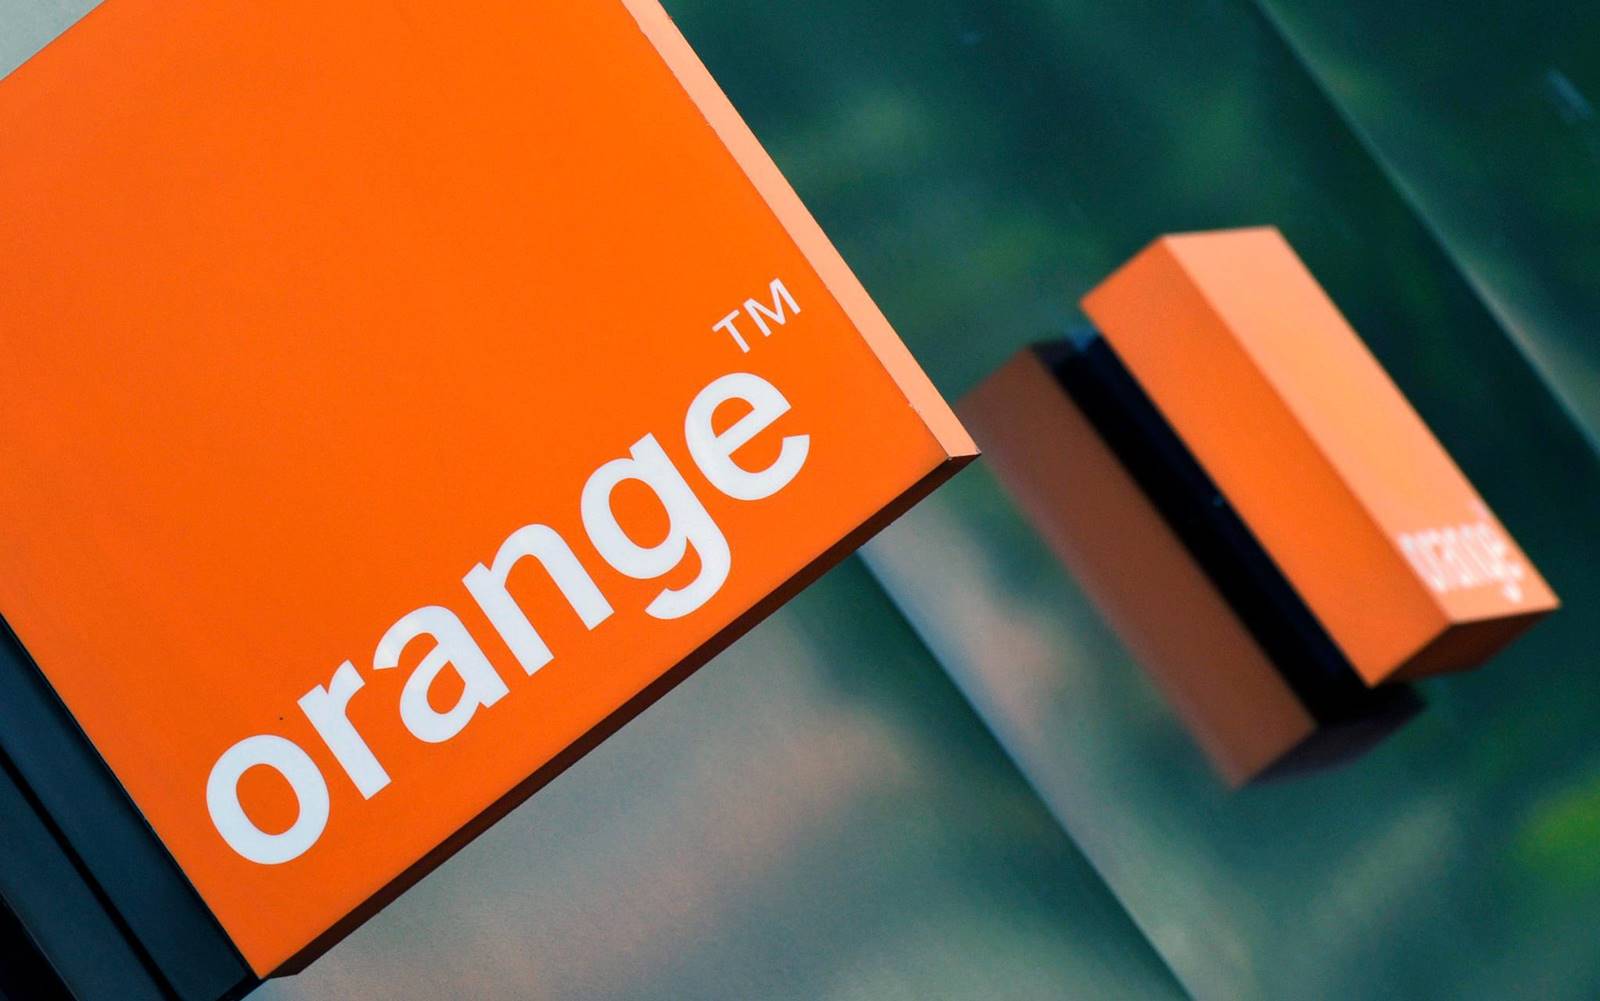 Orange are Inainte de BLACK FRIDAY 2019 ULTIMELE OFERTE BUNE la Telefoane